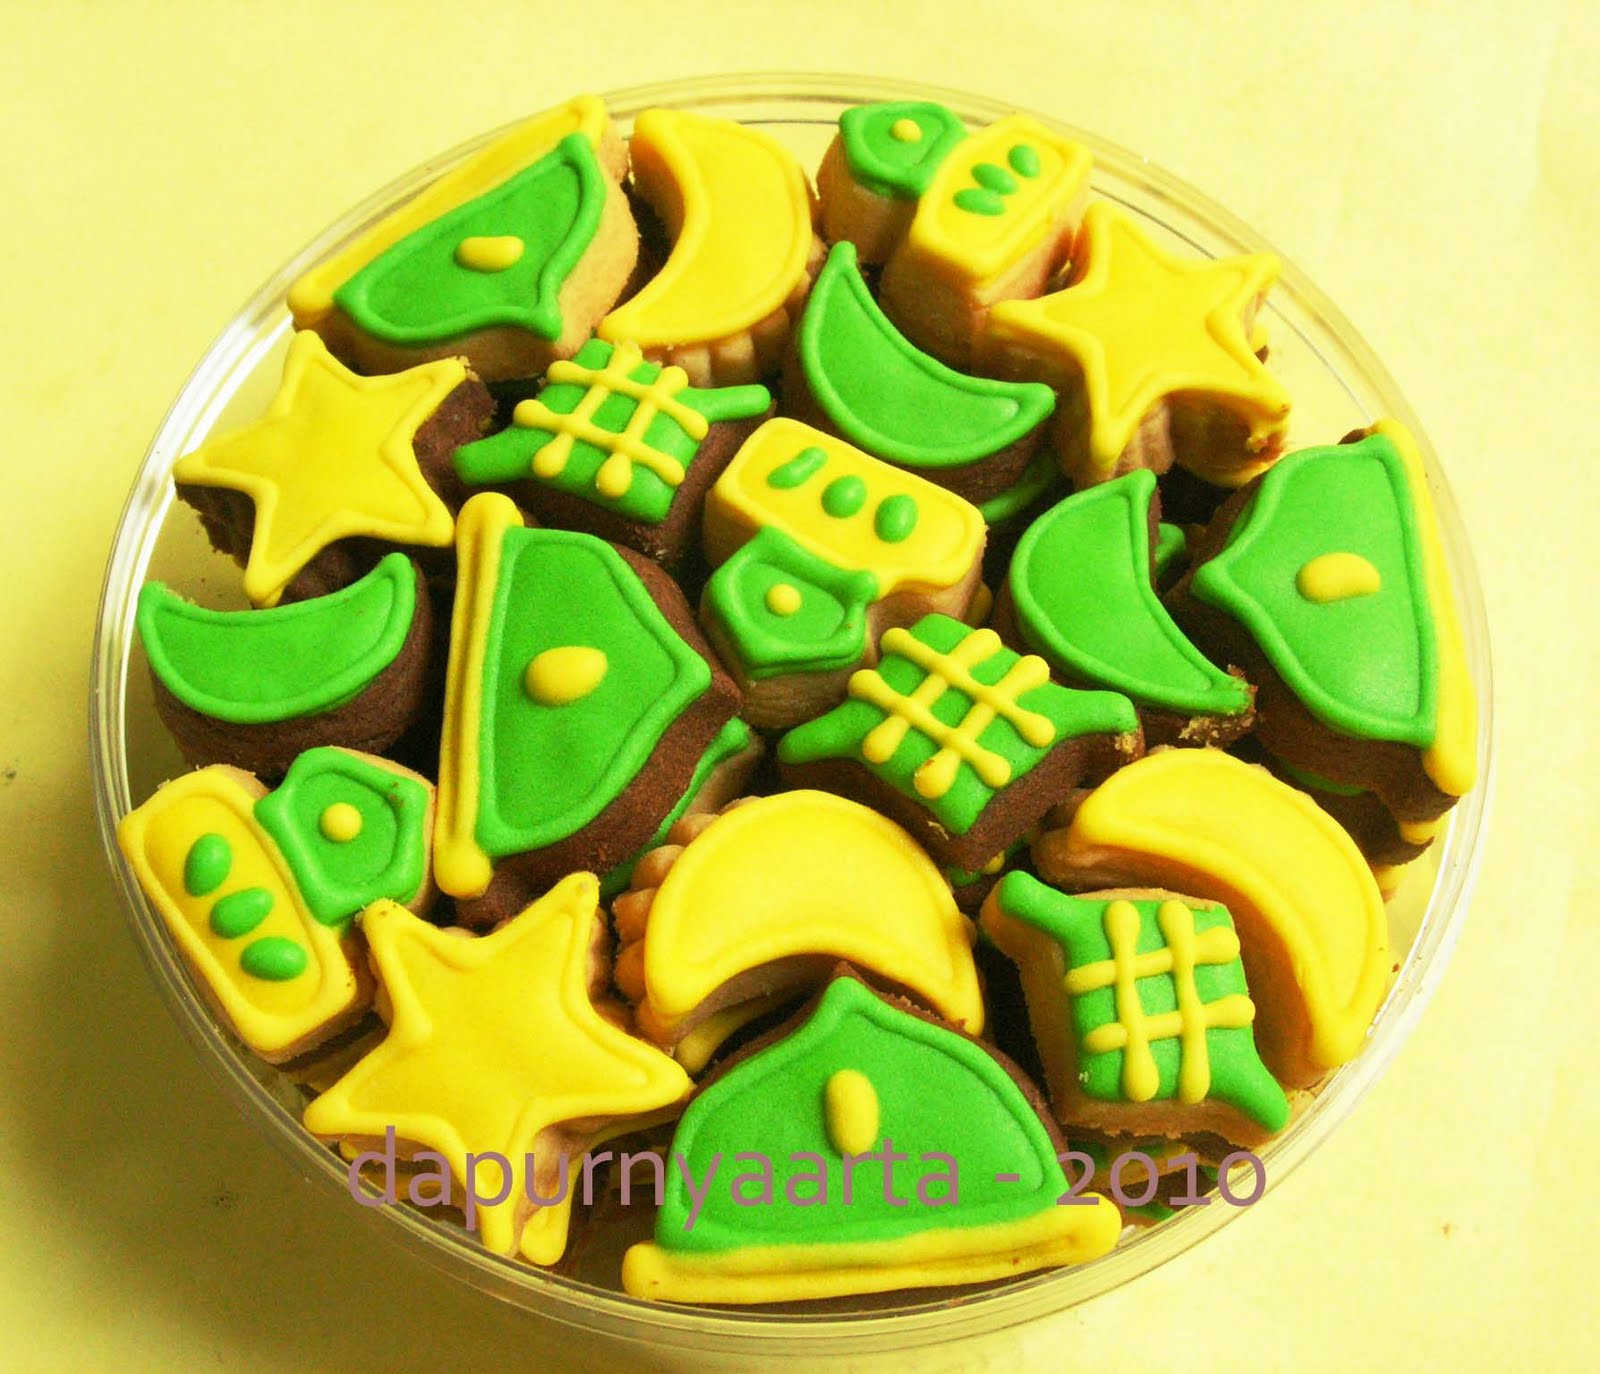 Dapurnya Arta: Cookies Tema Idul Fitri